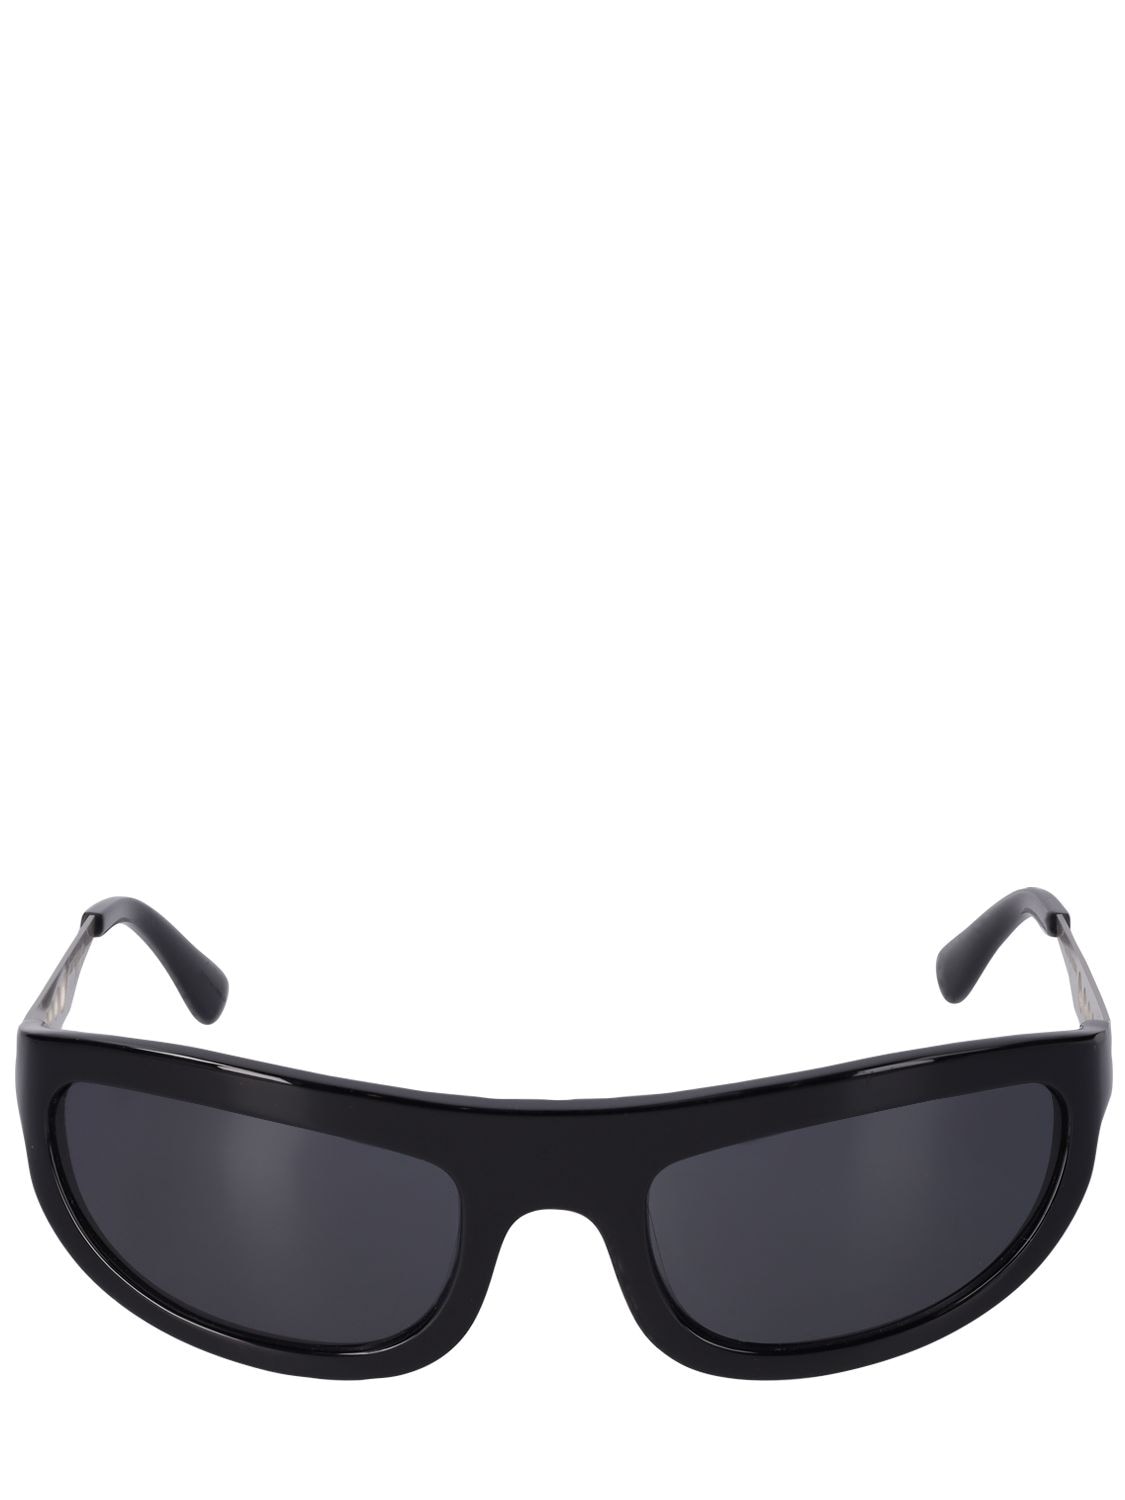 Image of Corten Black Steel Sunglasses